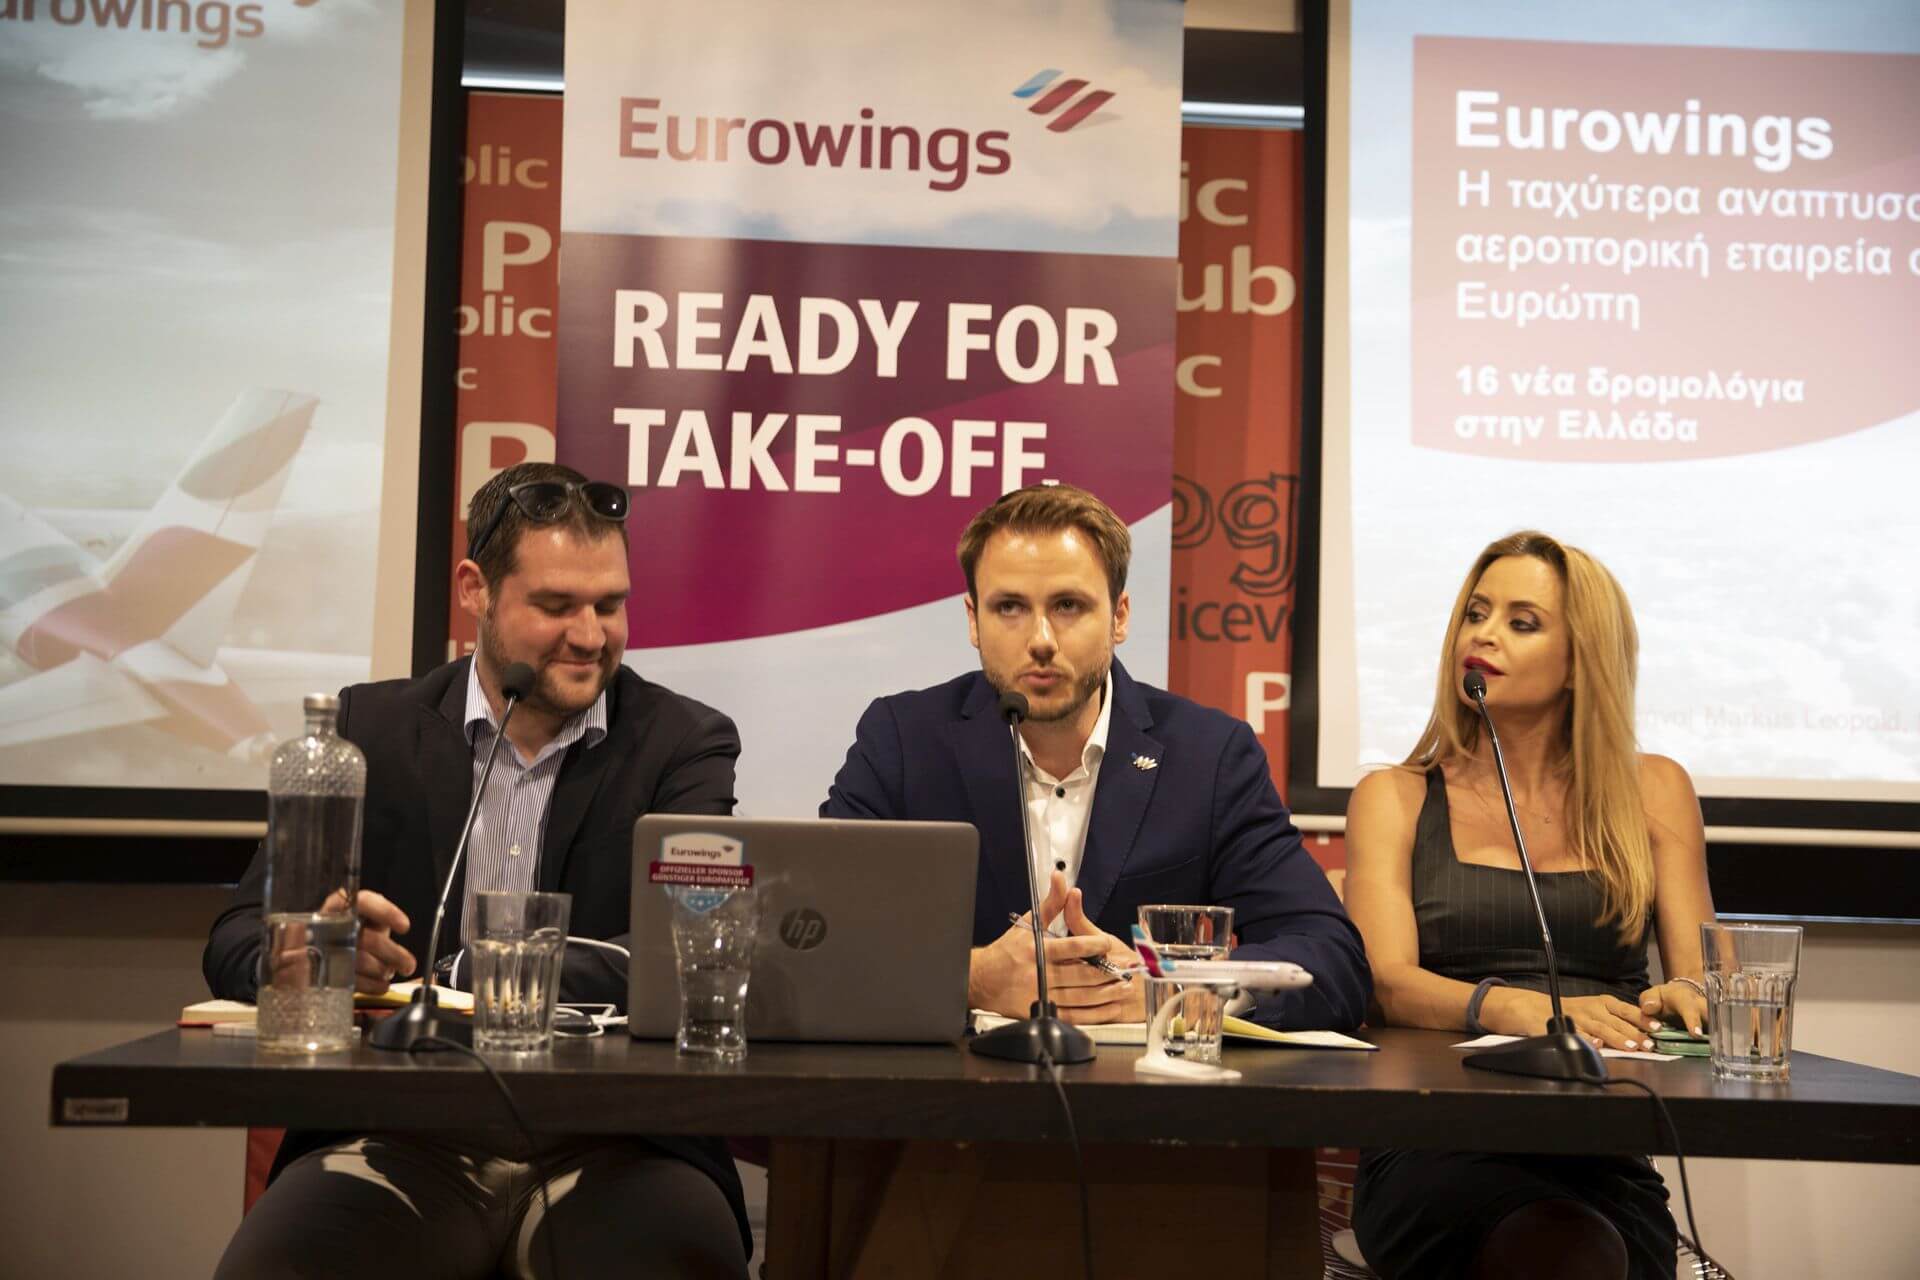 Î‘Ï€Î¿Ï„Î­Î»ÎµÏƒÎ¼Î± ÎµÎ¹ÎºÏŒÎ½Î±Ï‚ Î³Î¹Î± Eurowings launches 16 new routes to/from Greece this summer